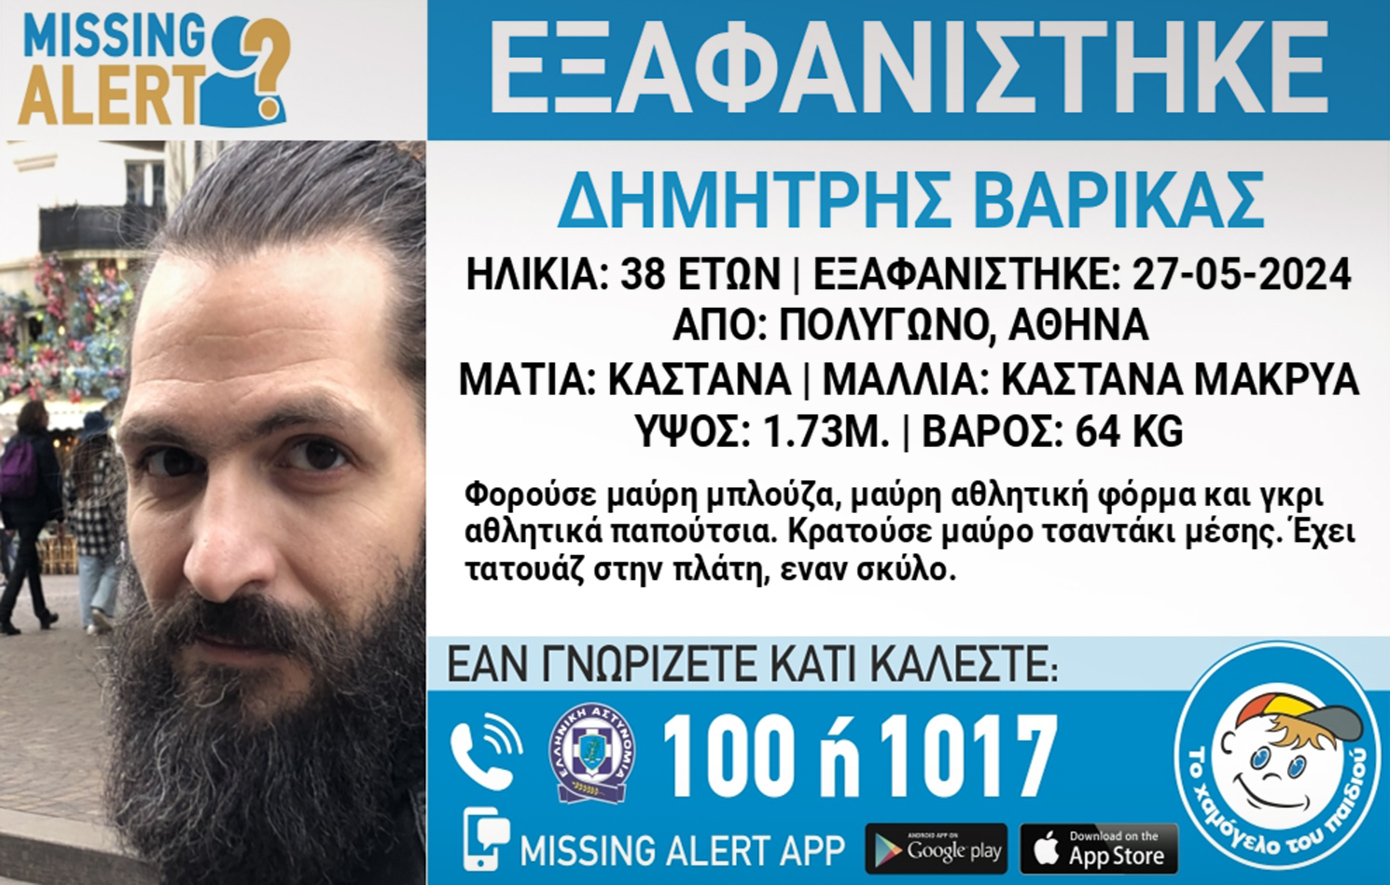 Missing Αlert για την εξαφάνιση 38χρονου από το Πολύγωνο στην Αθήνα